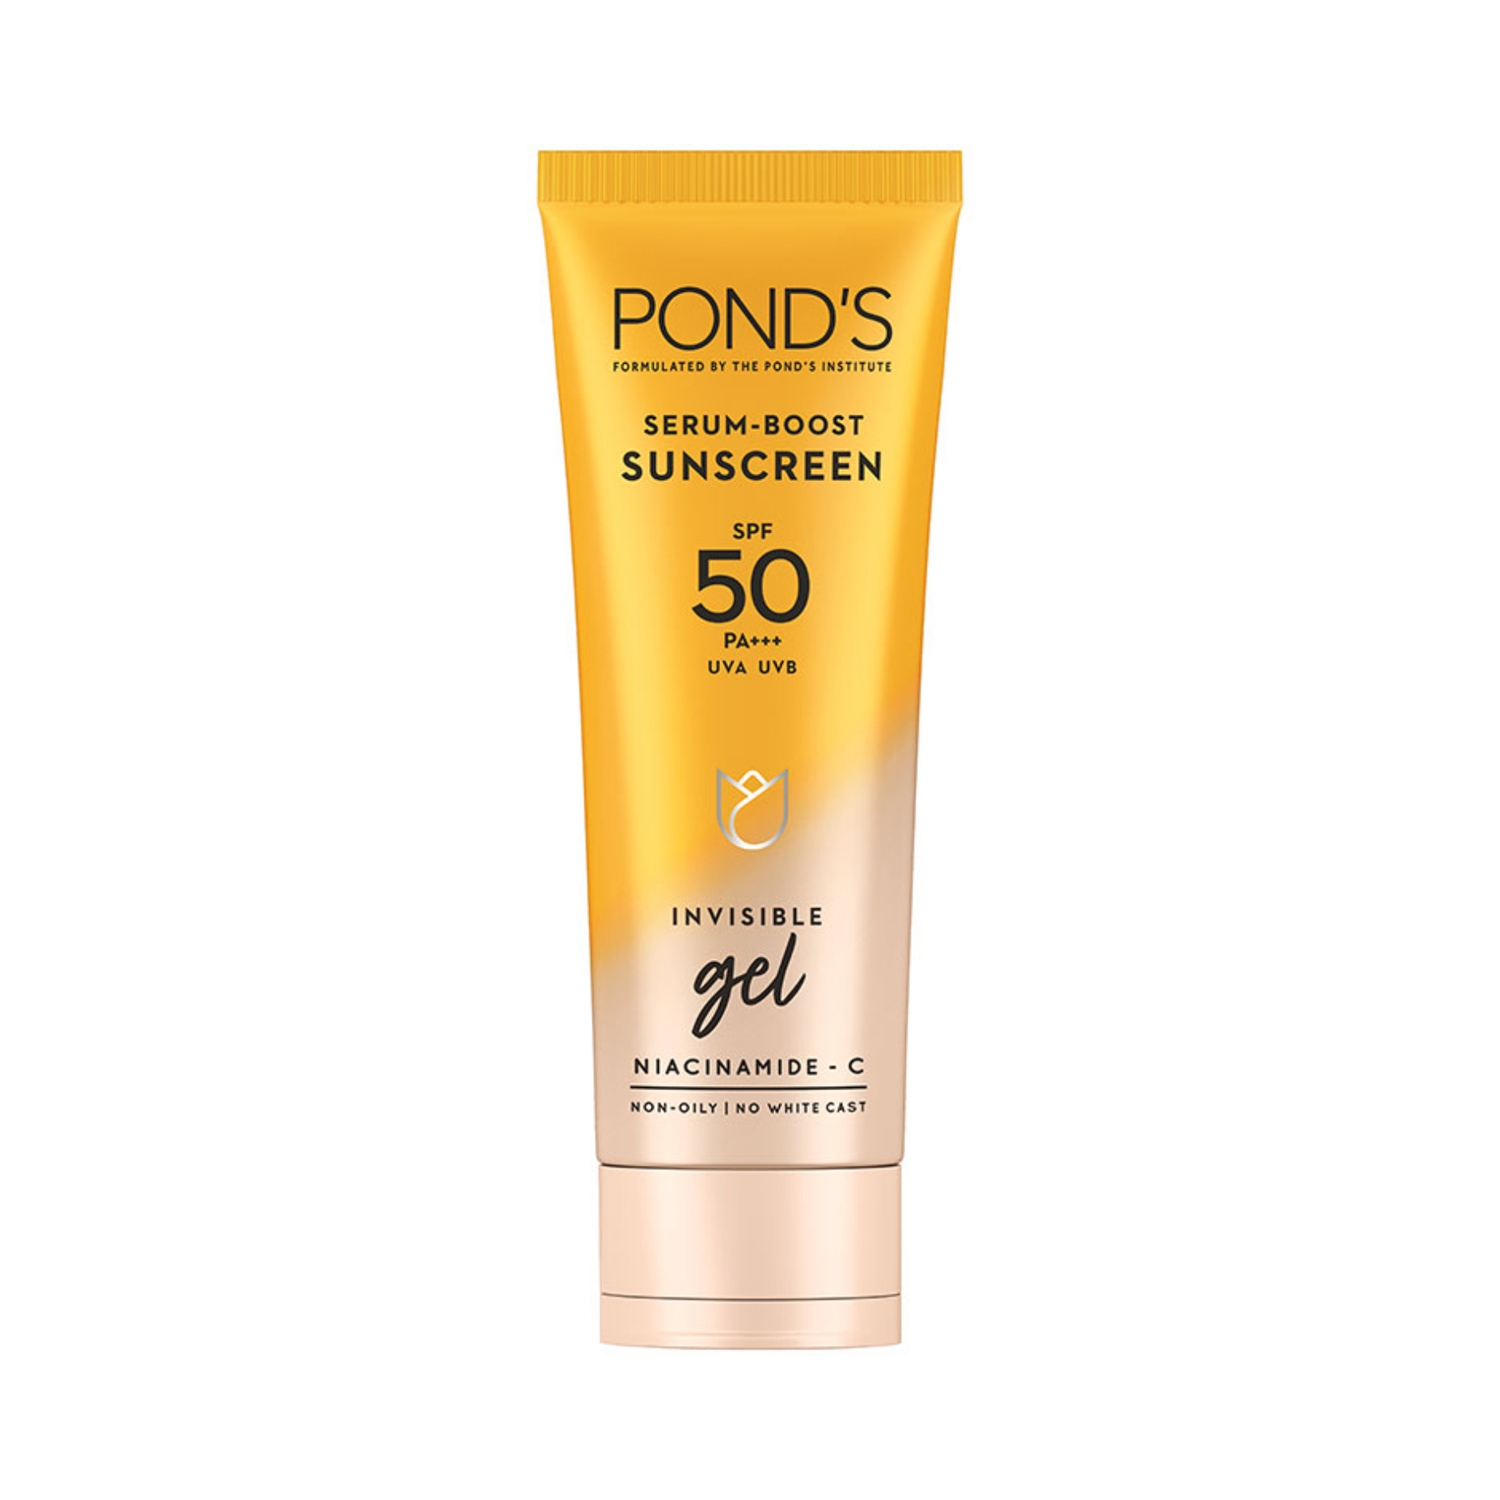 Pond's | Pond's Serum Boost Sunscreen Gel SPF 50 (100g)